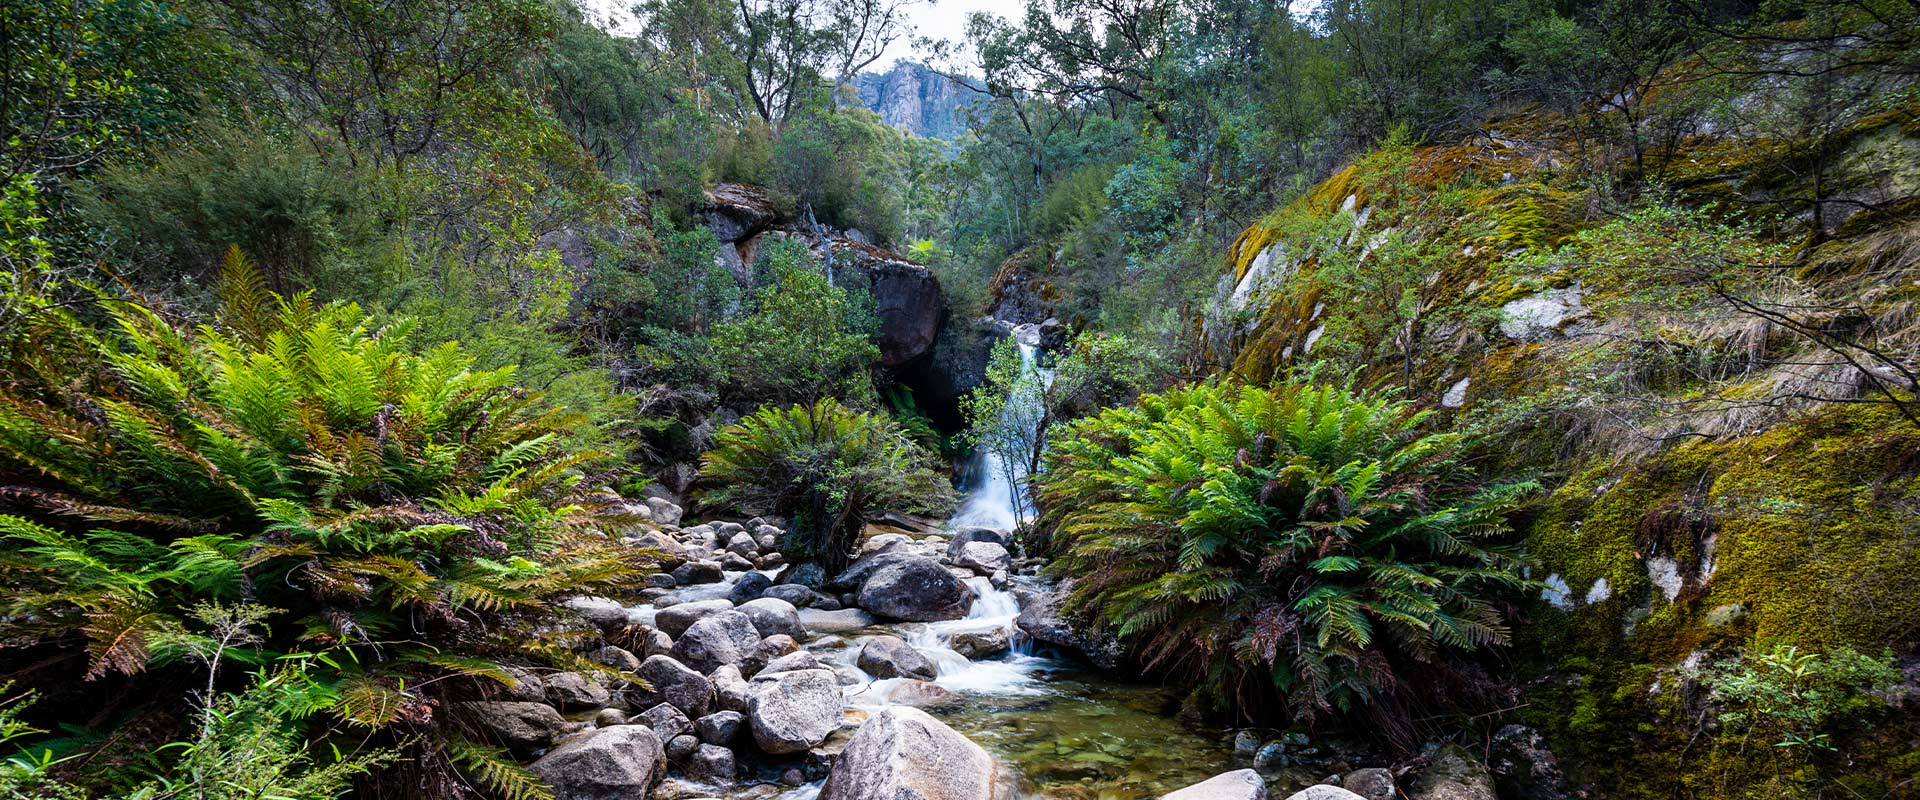 Water flows down a small waterfall between lush green ferns